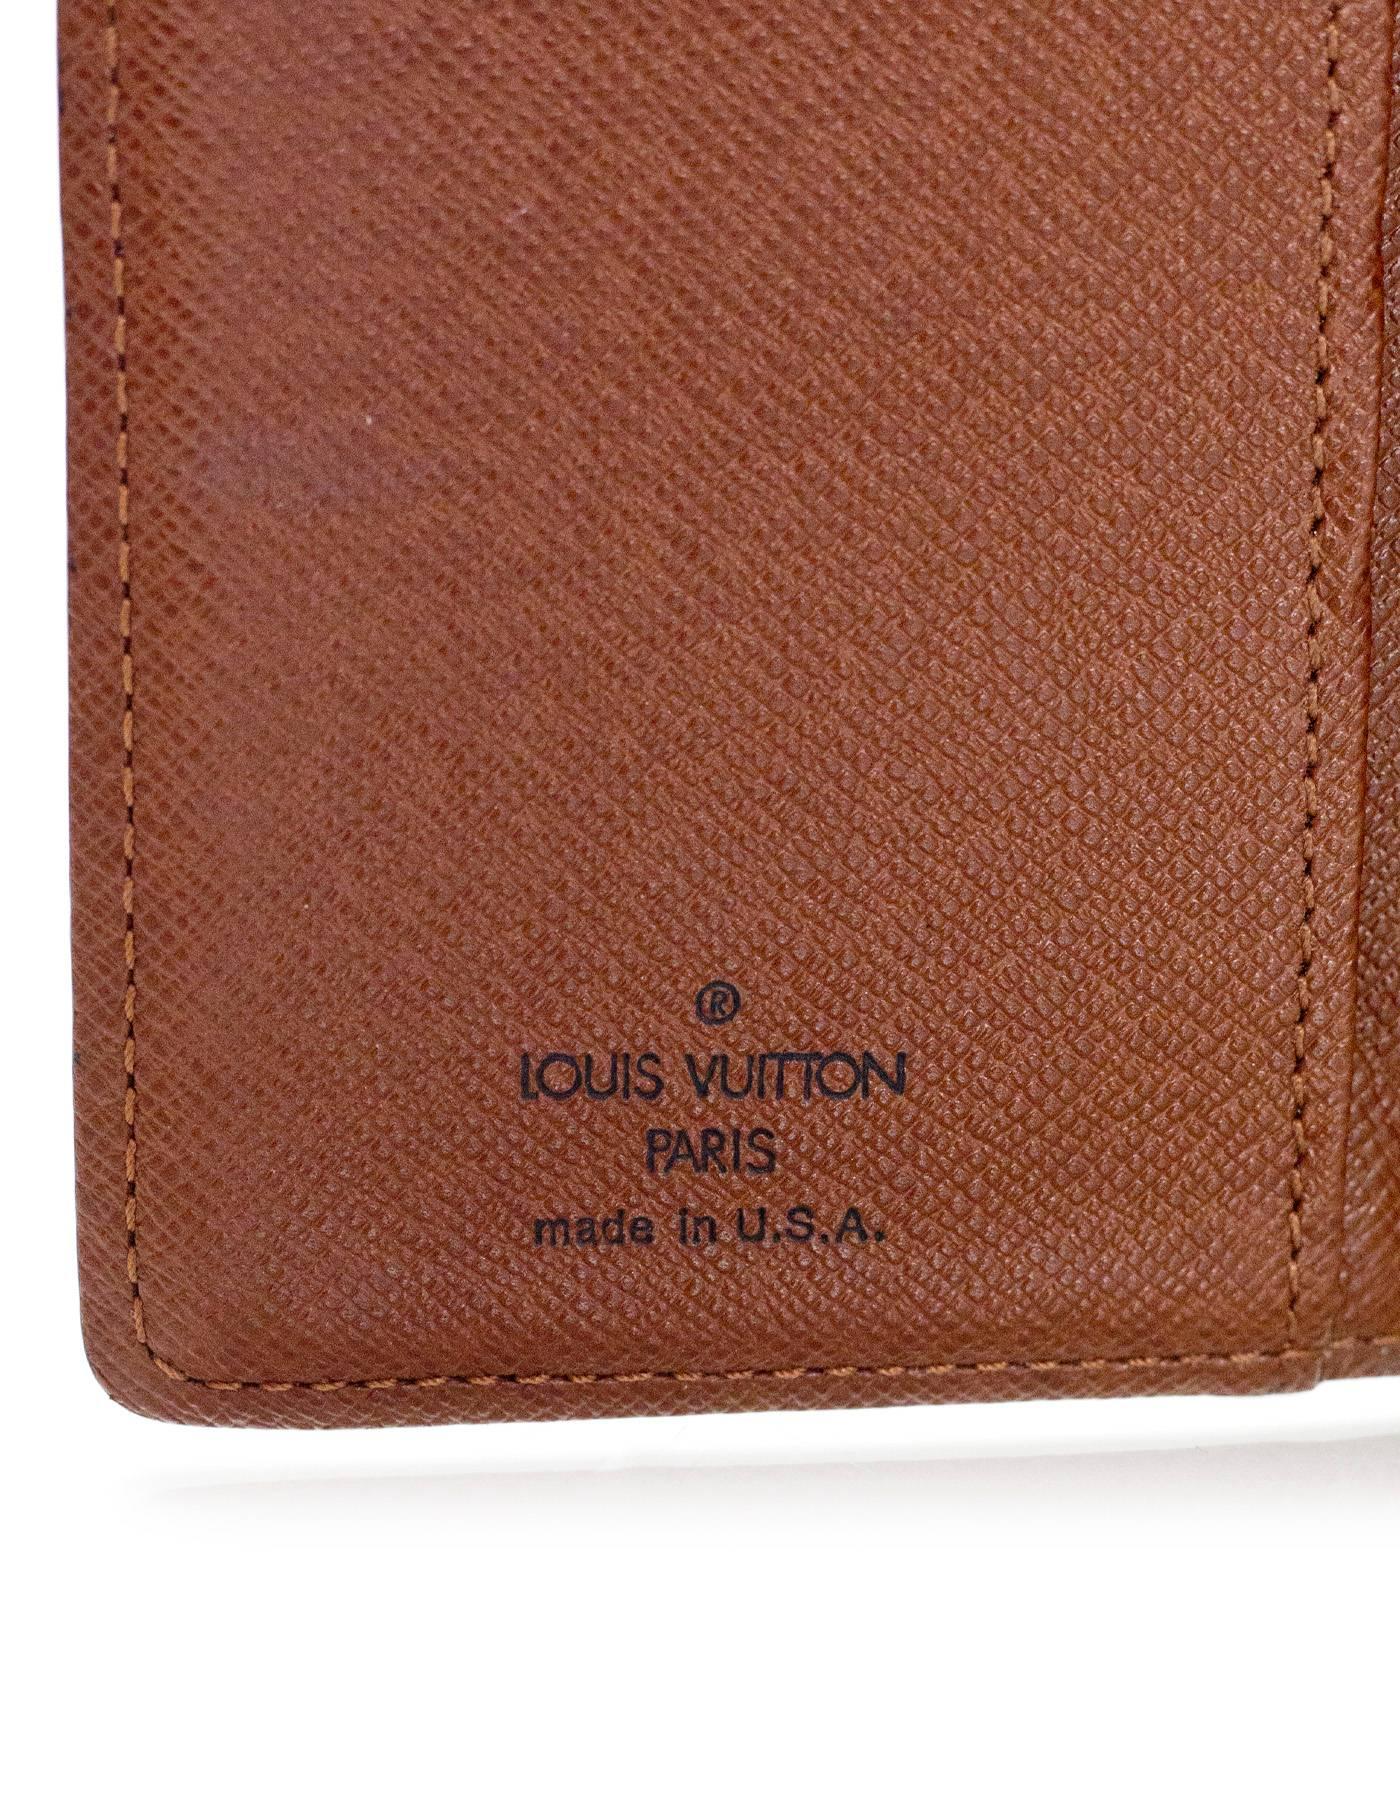 Louis Vuitton Monogram Small Ring Agenda Cover 3